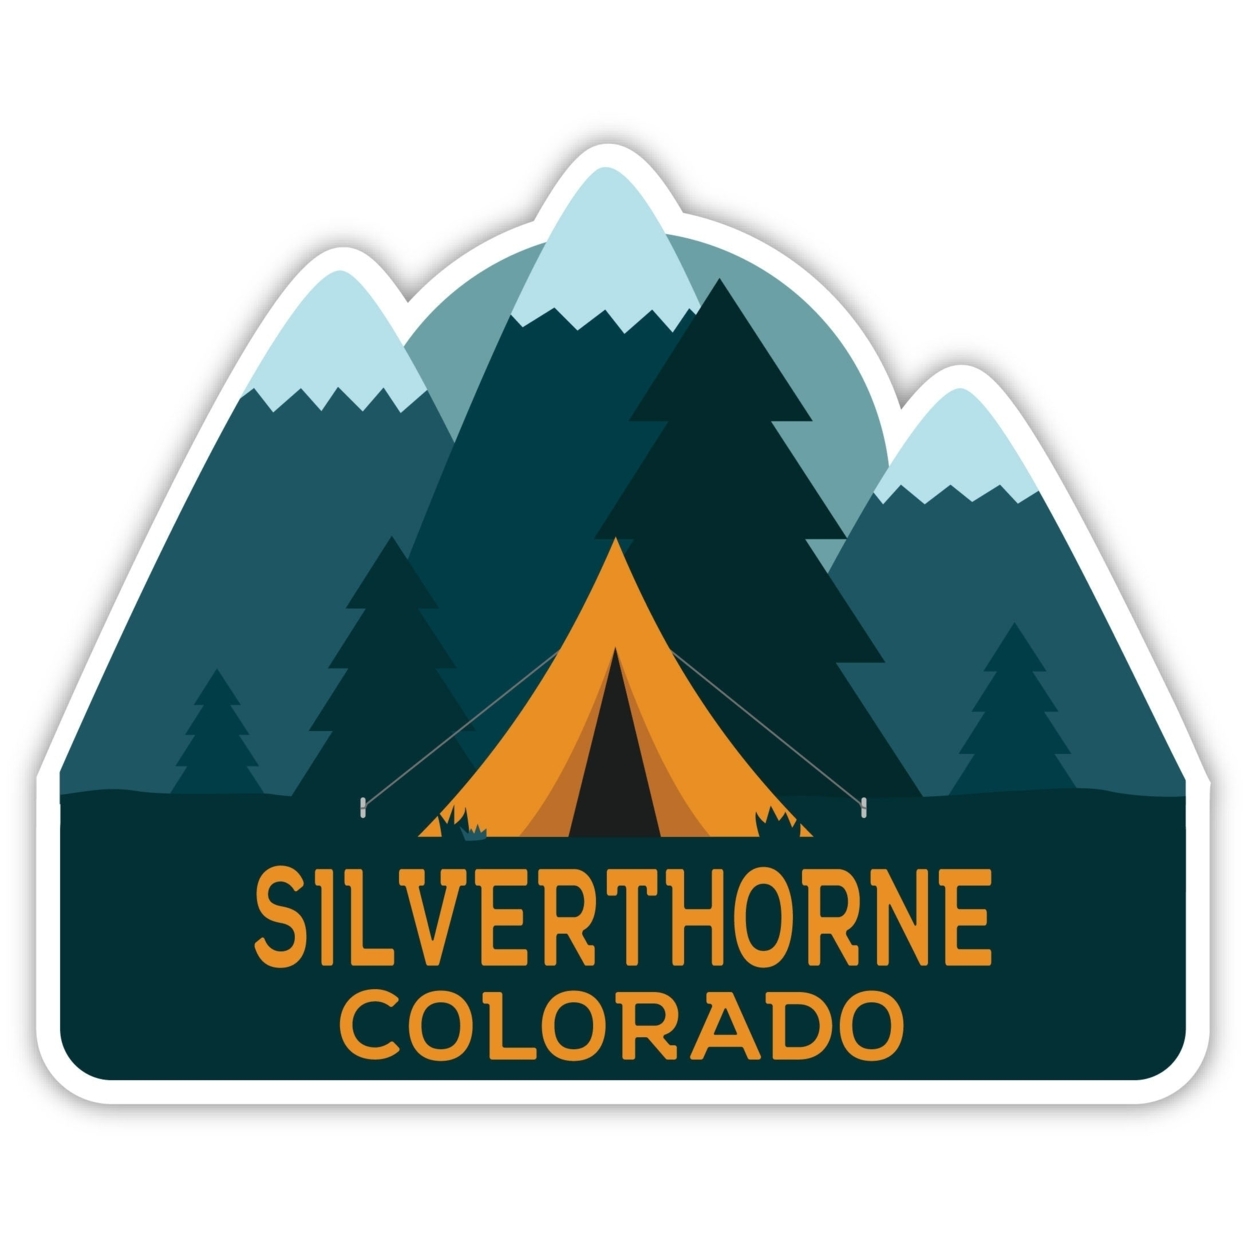 Silverthorne Colorado Souvenir Decorative Stickers (Choose Theme And Size) - Single Unit, 4-Inch, Camp Life